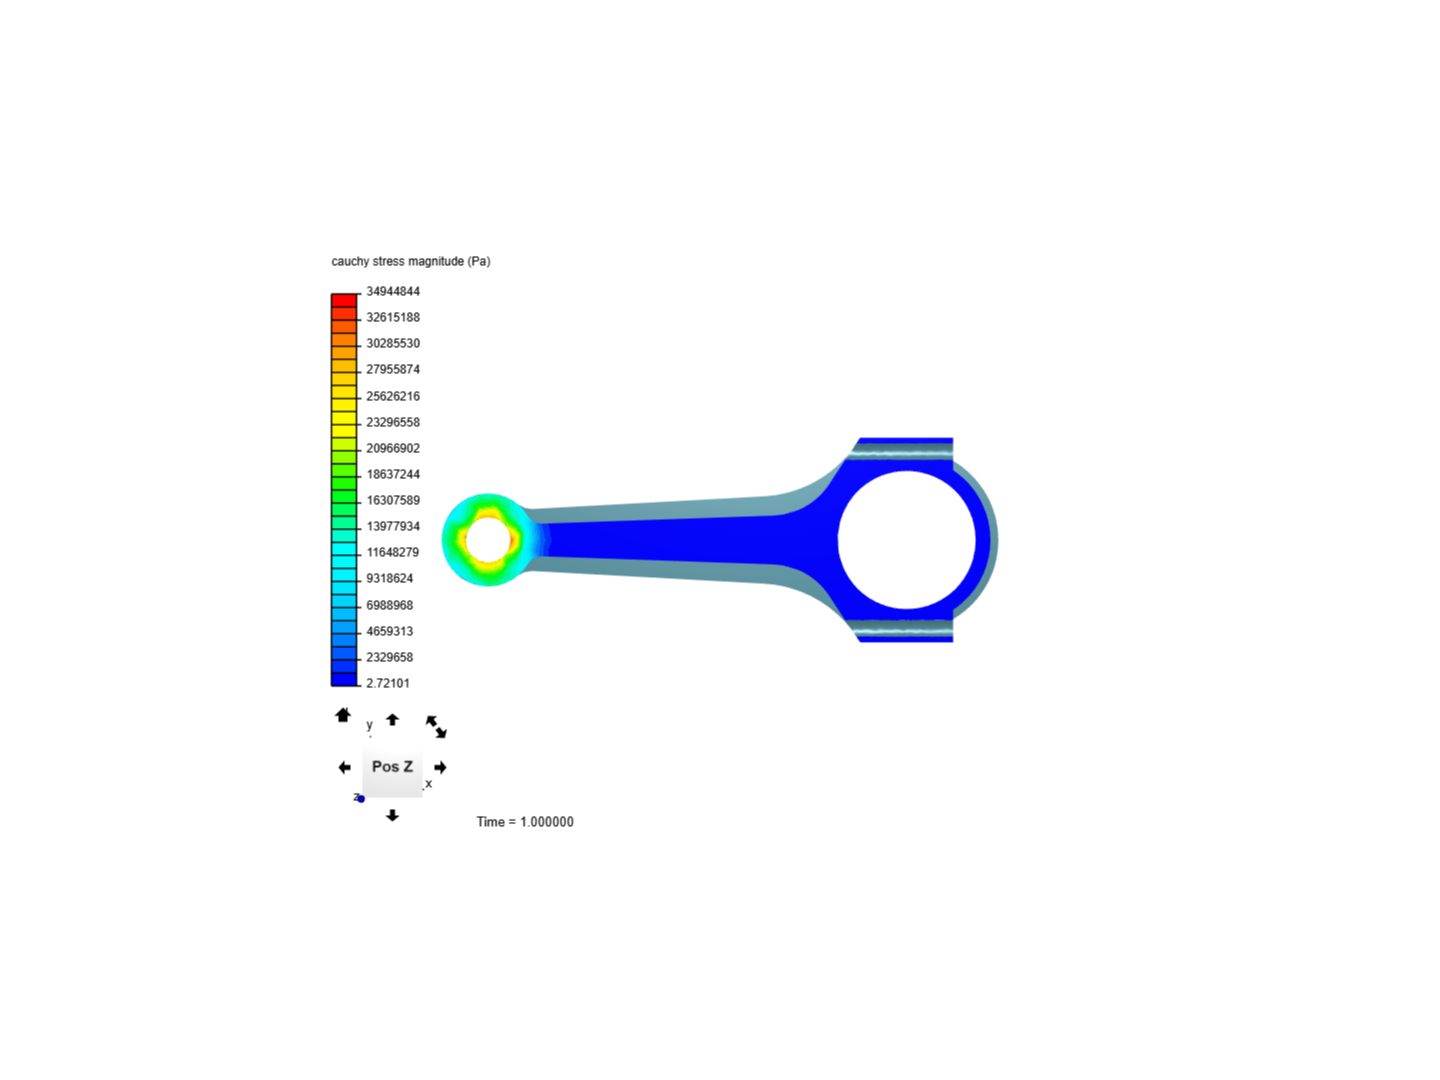 Tutorial-01: Connecting rod stress analysis image